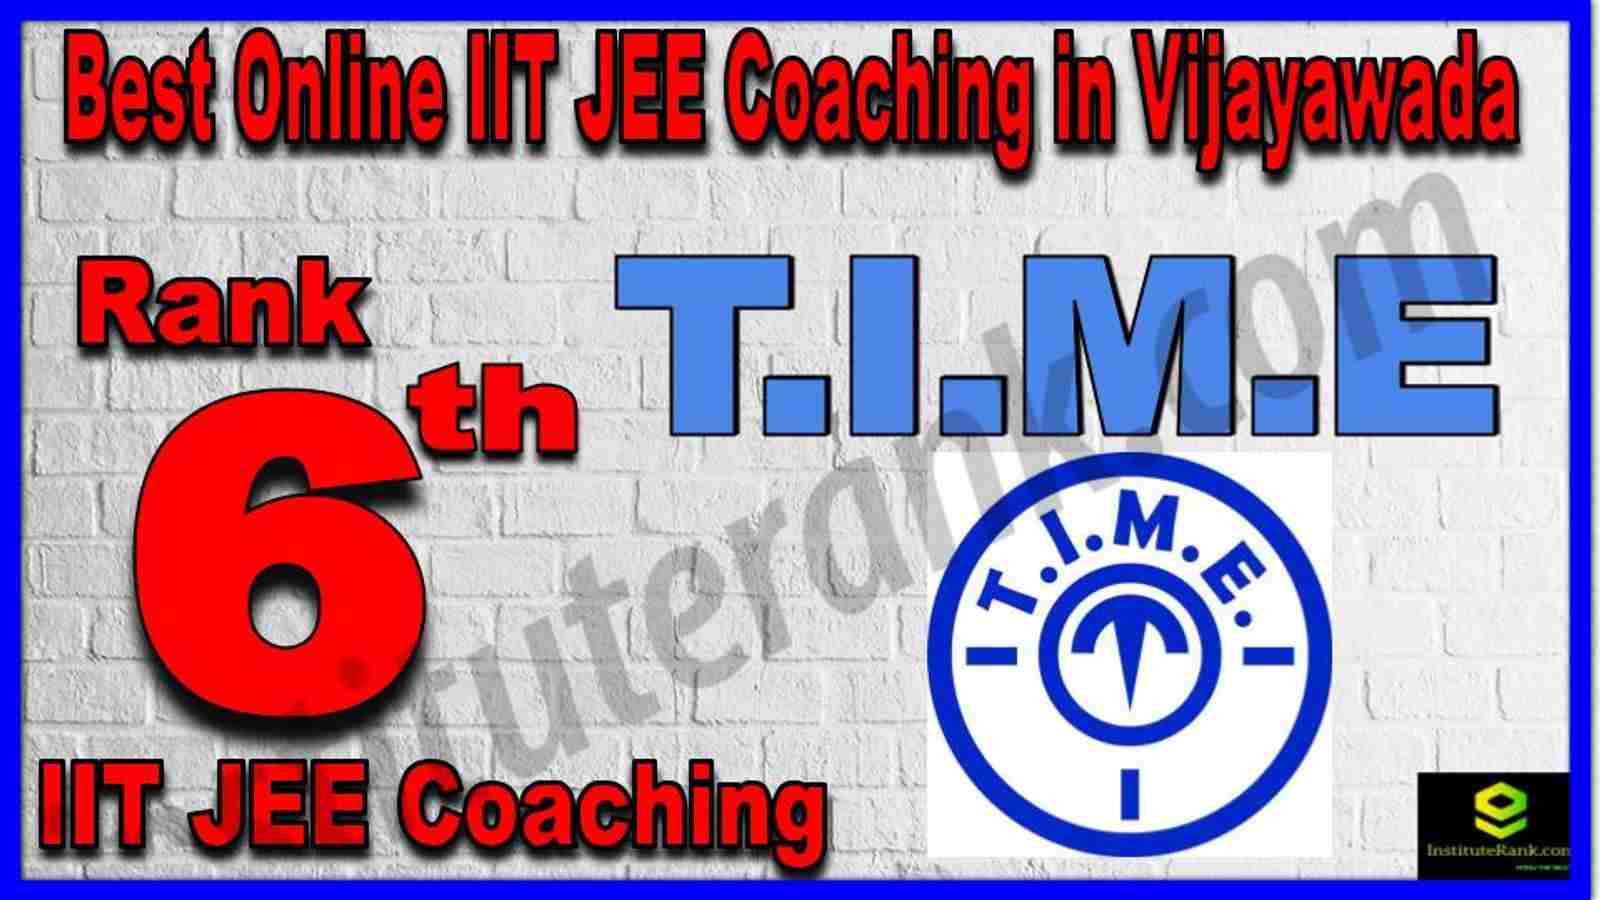 Rank 6th Best Online IIT JEE Coaching in Vijayawada